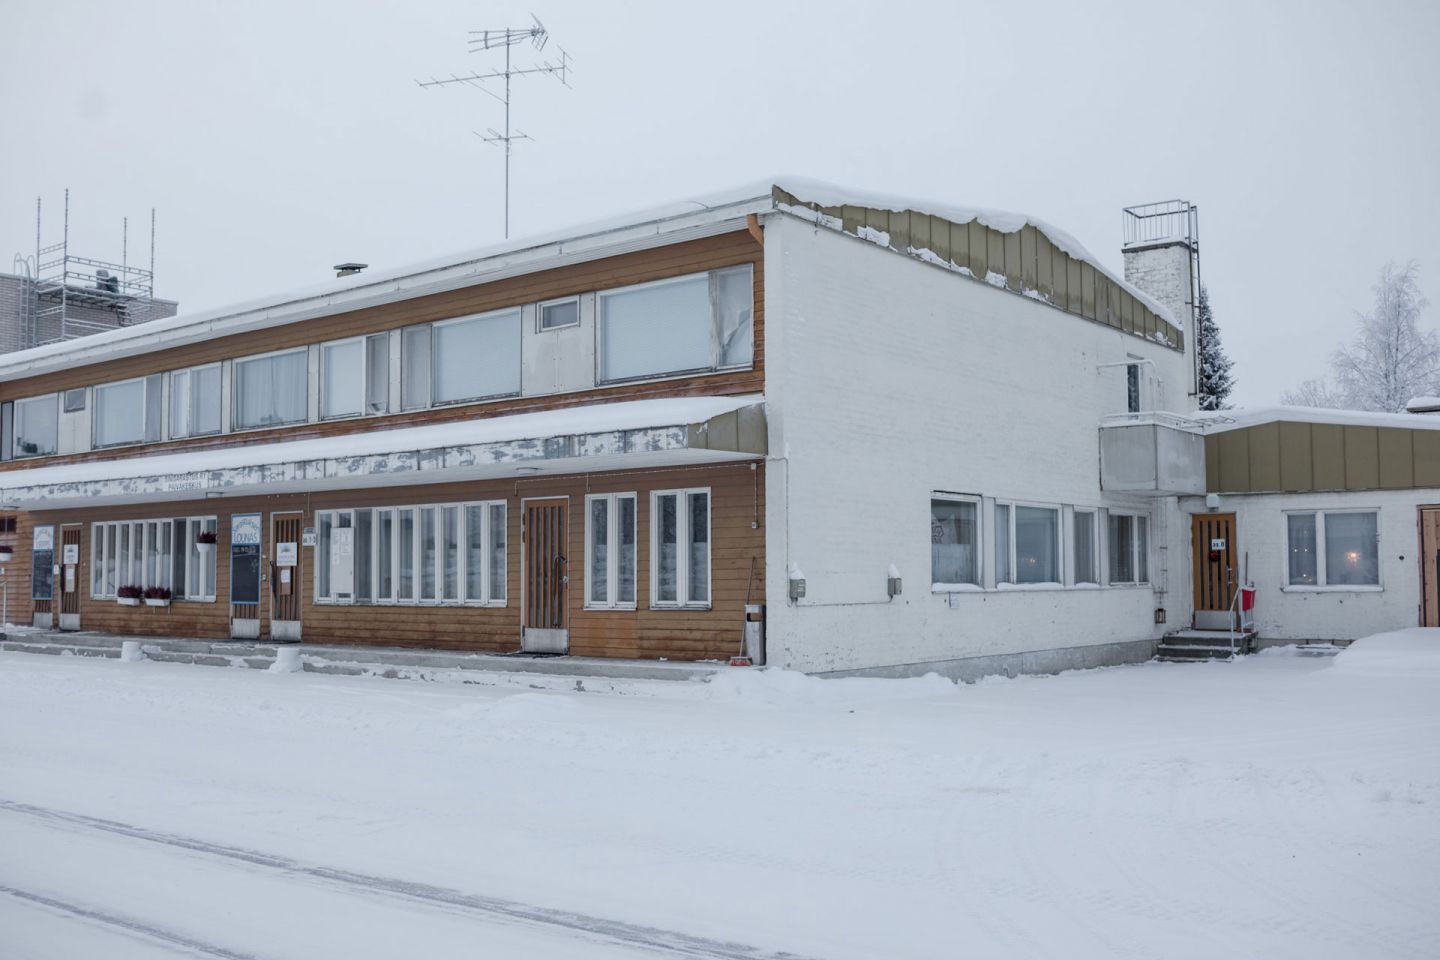 Winter in Sodankylä, Finland